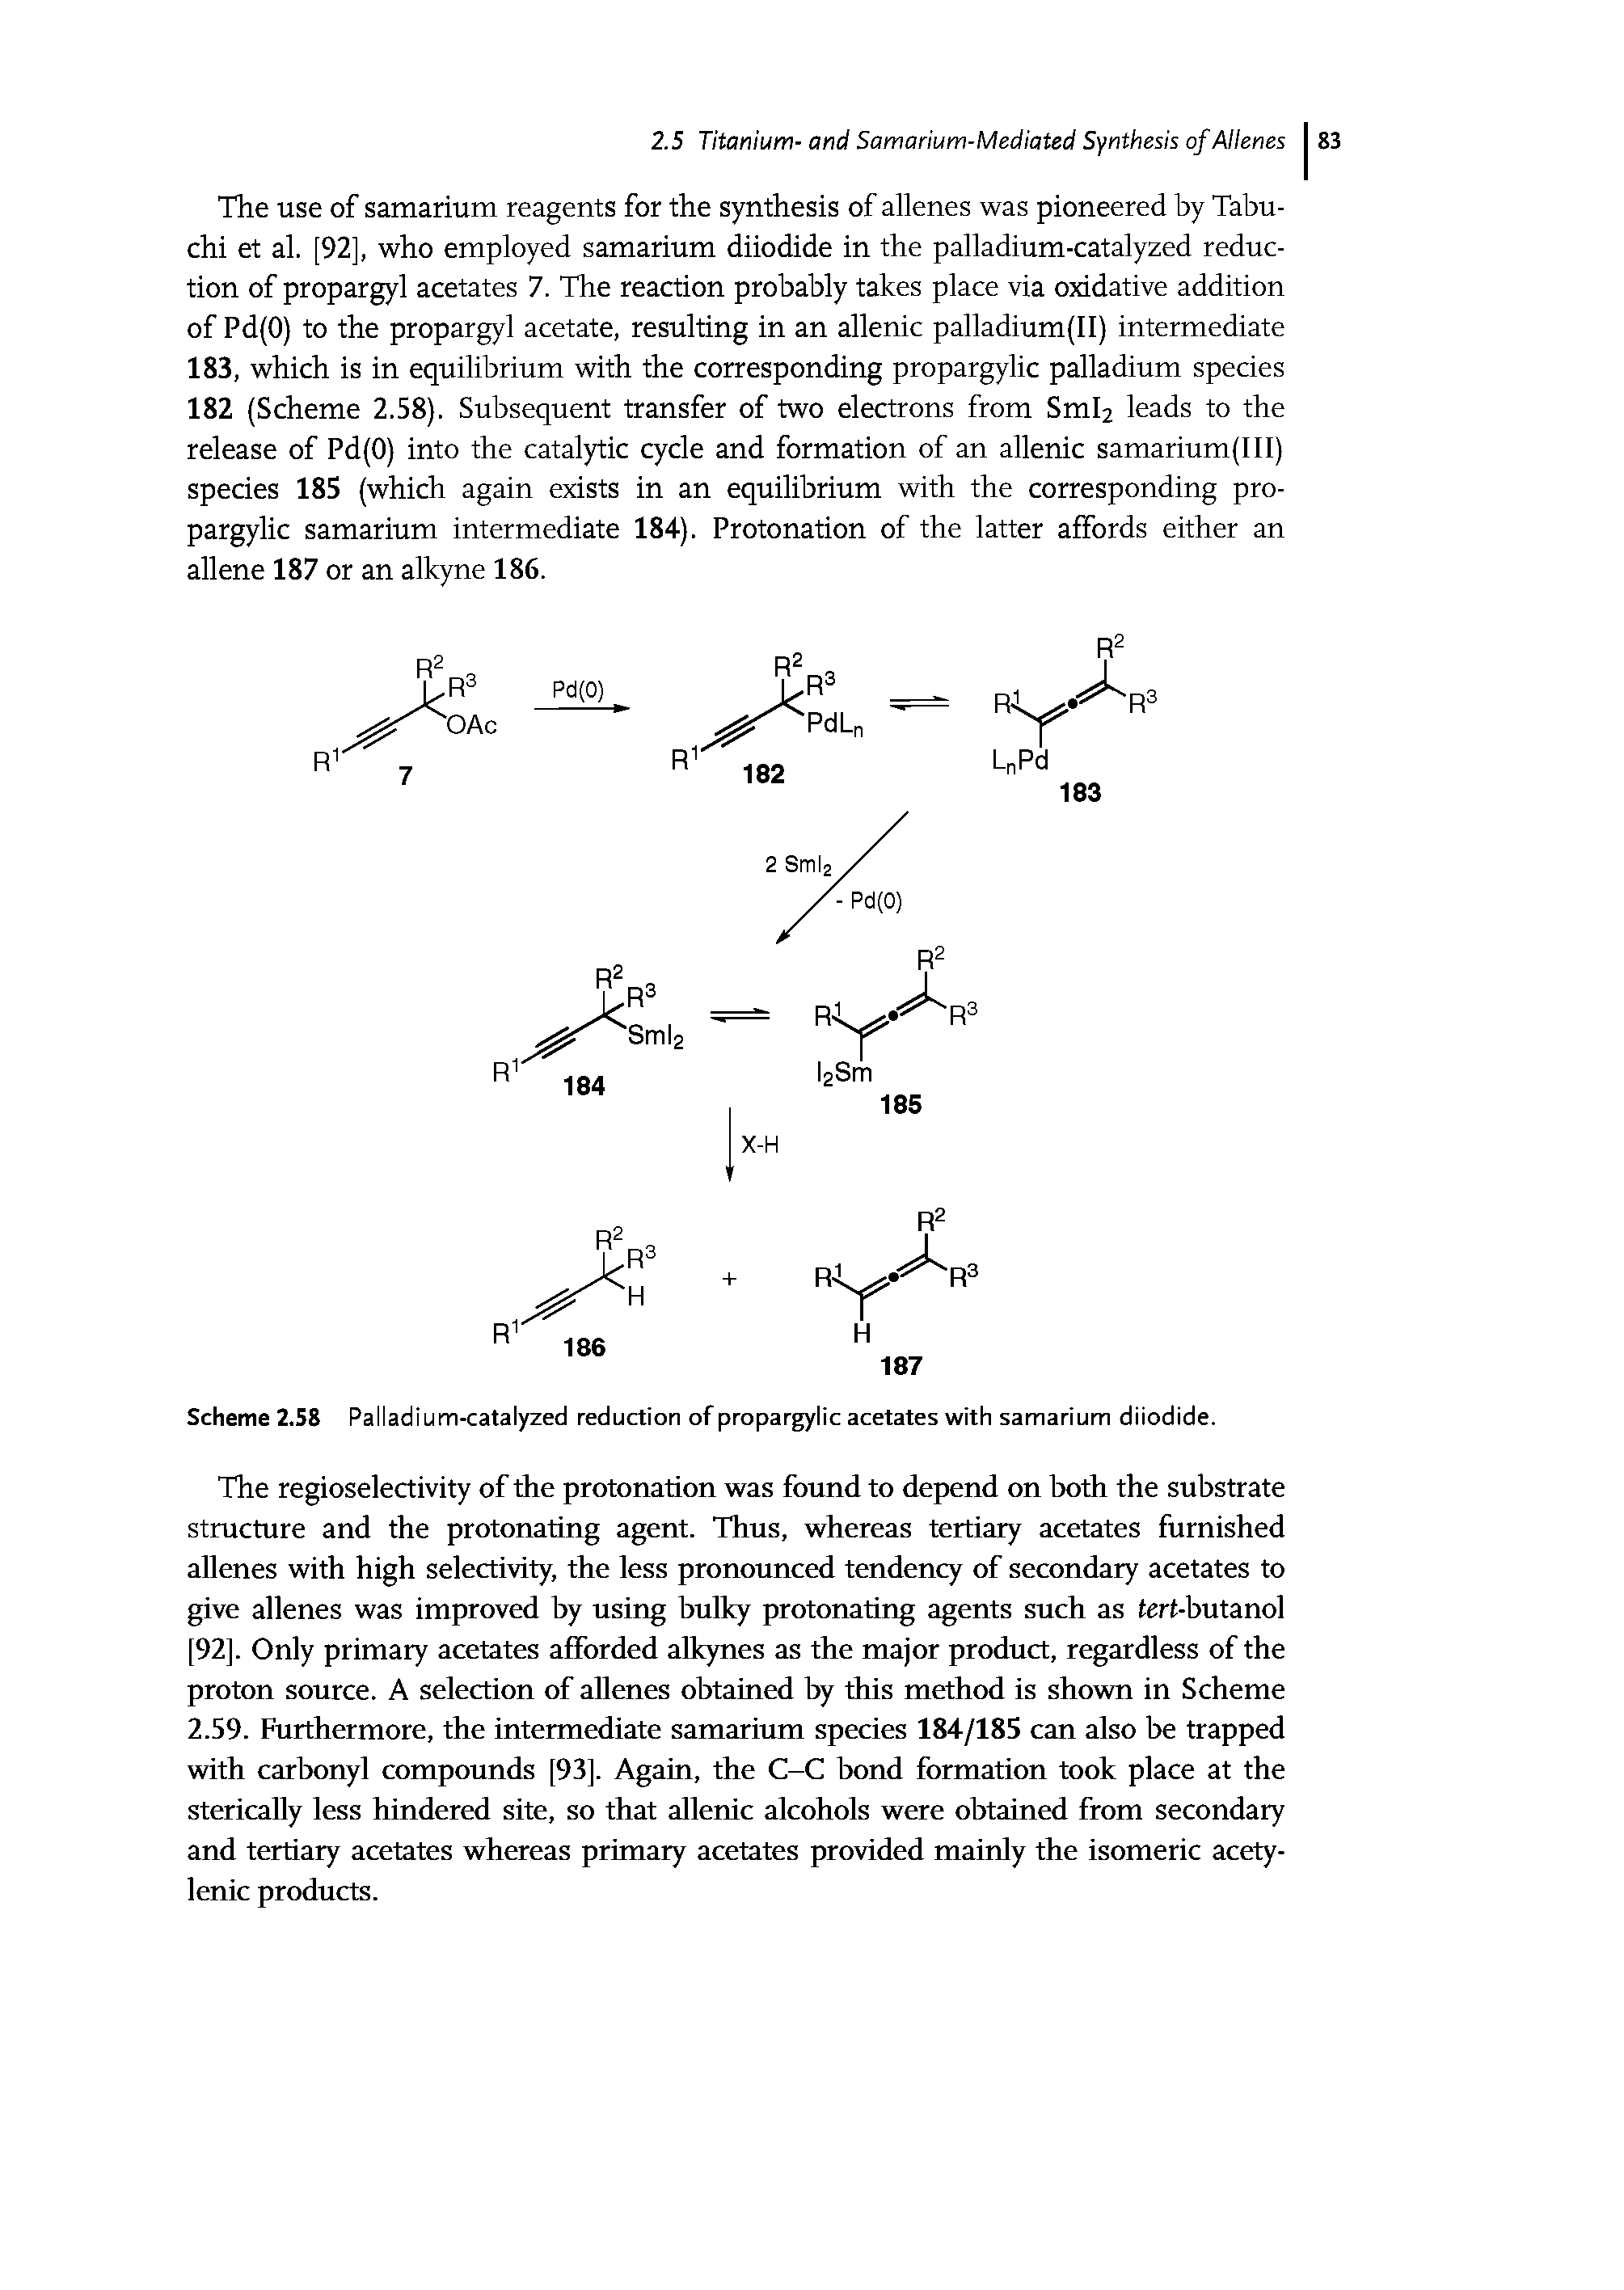 Scheme 2.58 Palladium-catalyzed reduction of propargylic acetates with samarium diiodide.